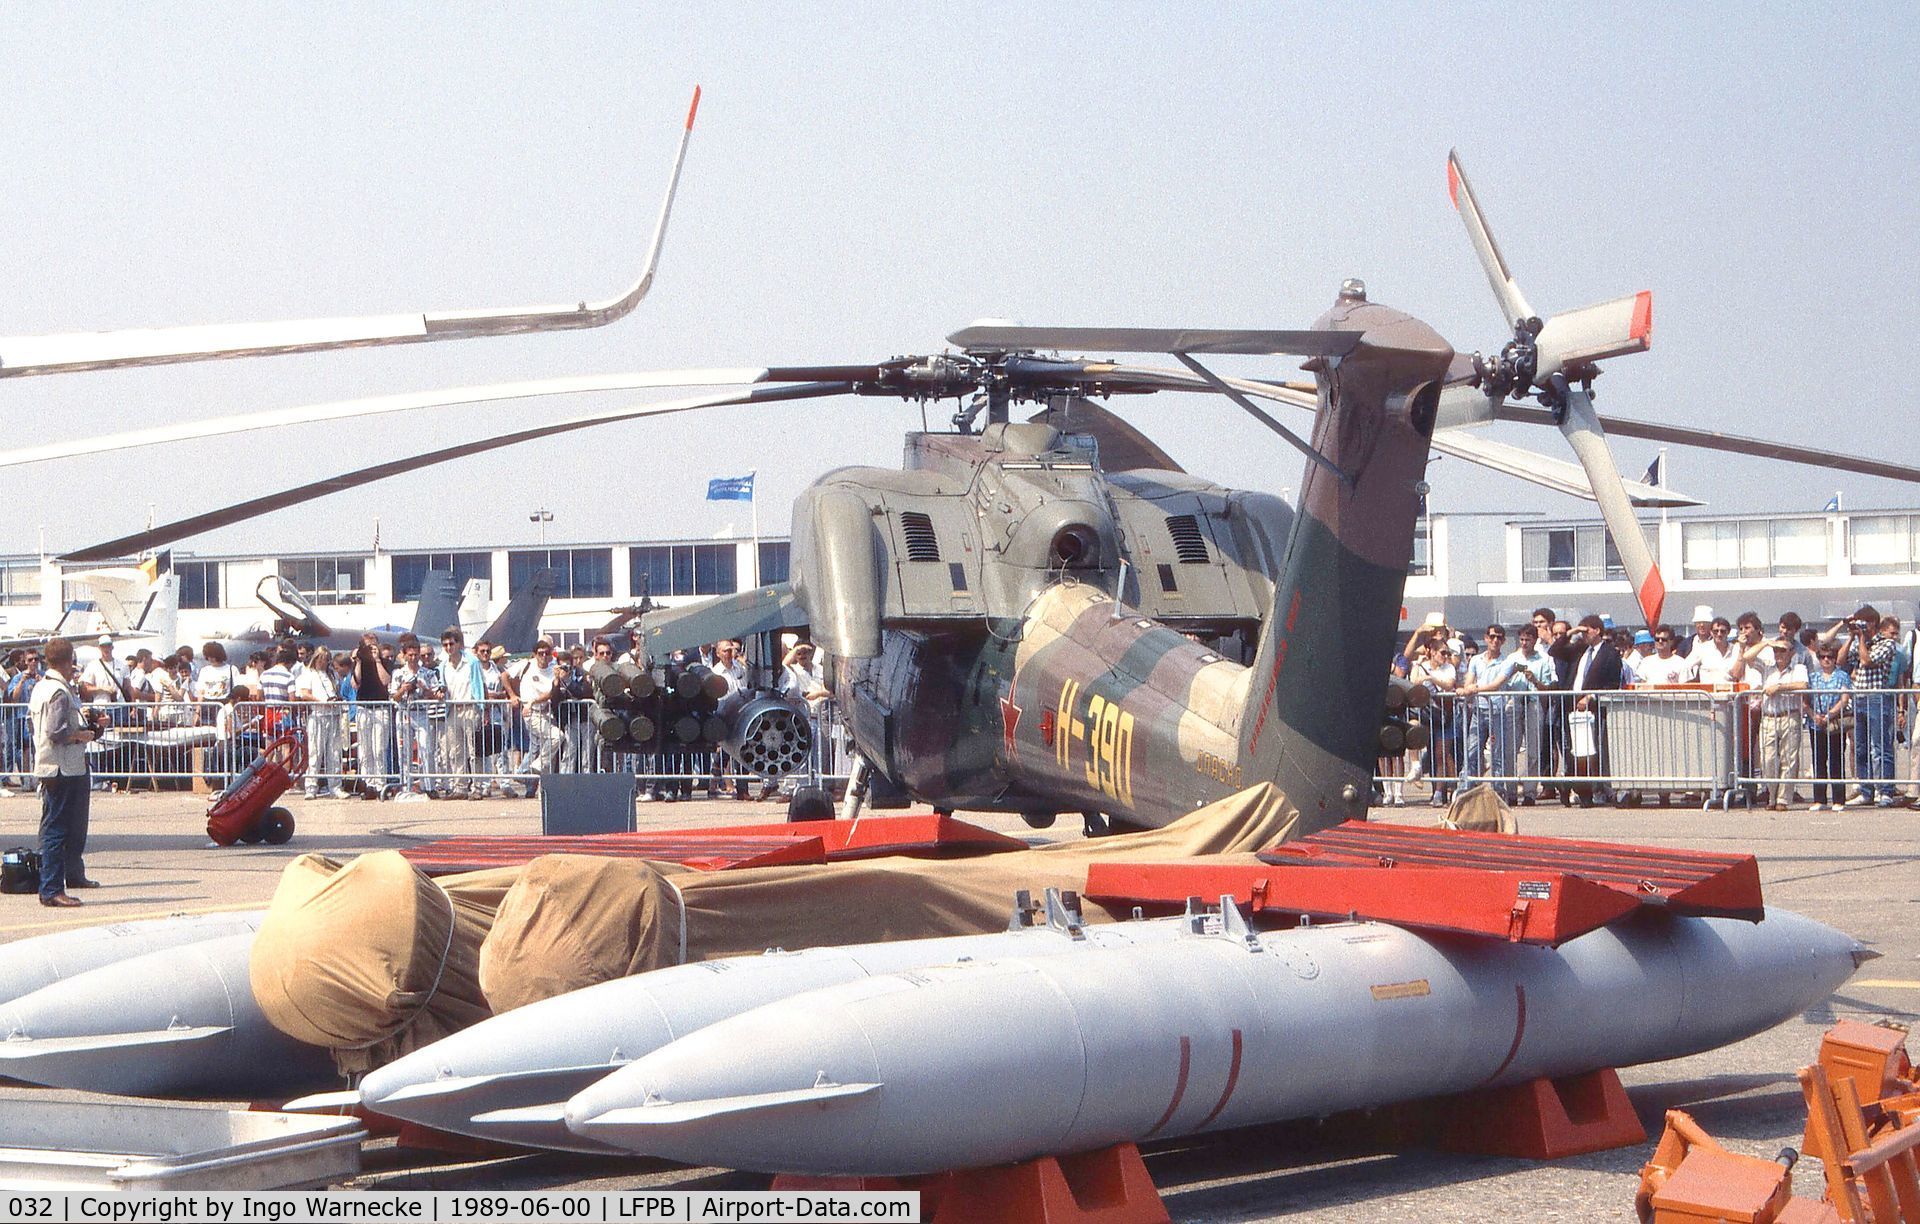 032, Mil Mi-28A C/N 003, Mil Mi-28A HAVOC (3rd prototype) at the Aerosalon 1989 Paris